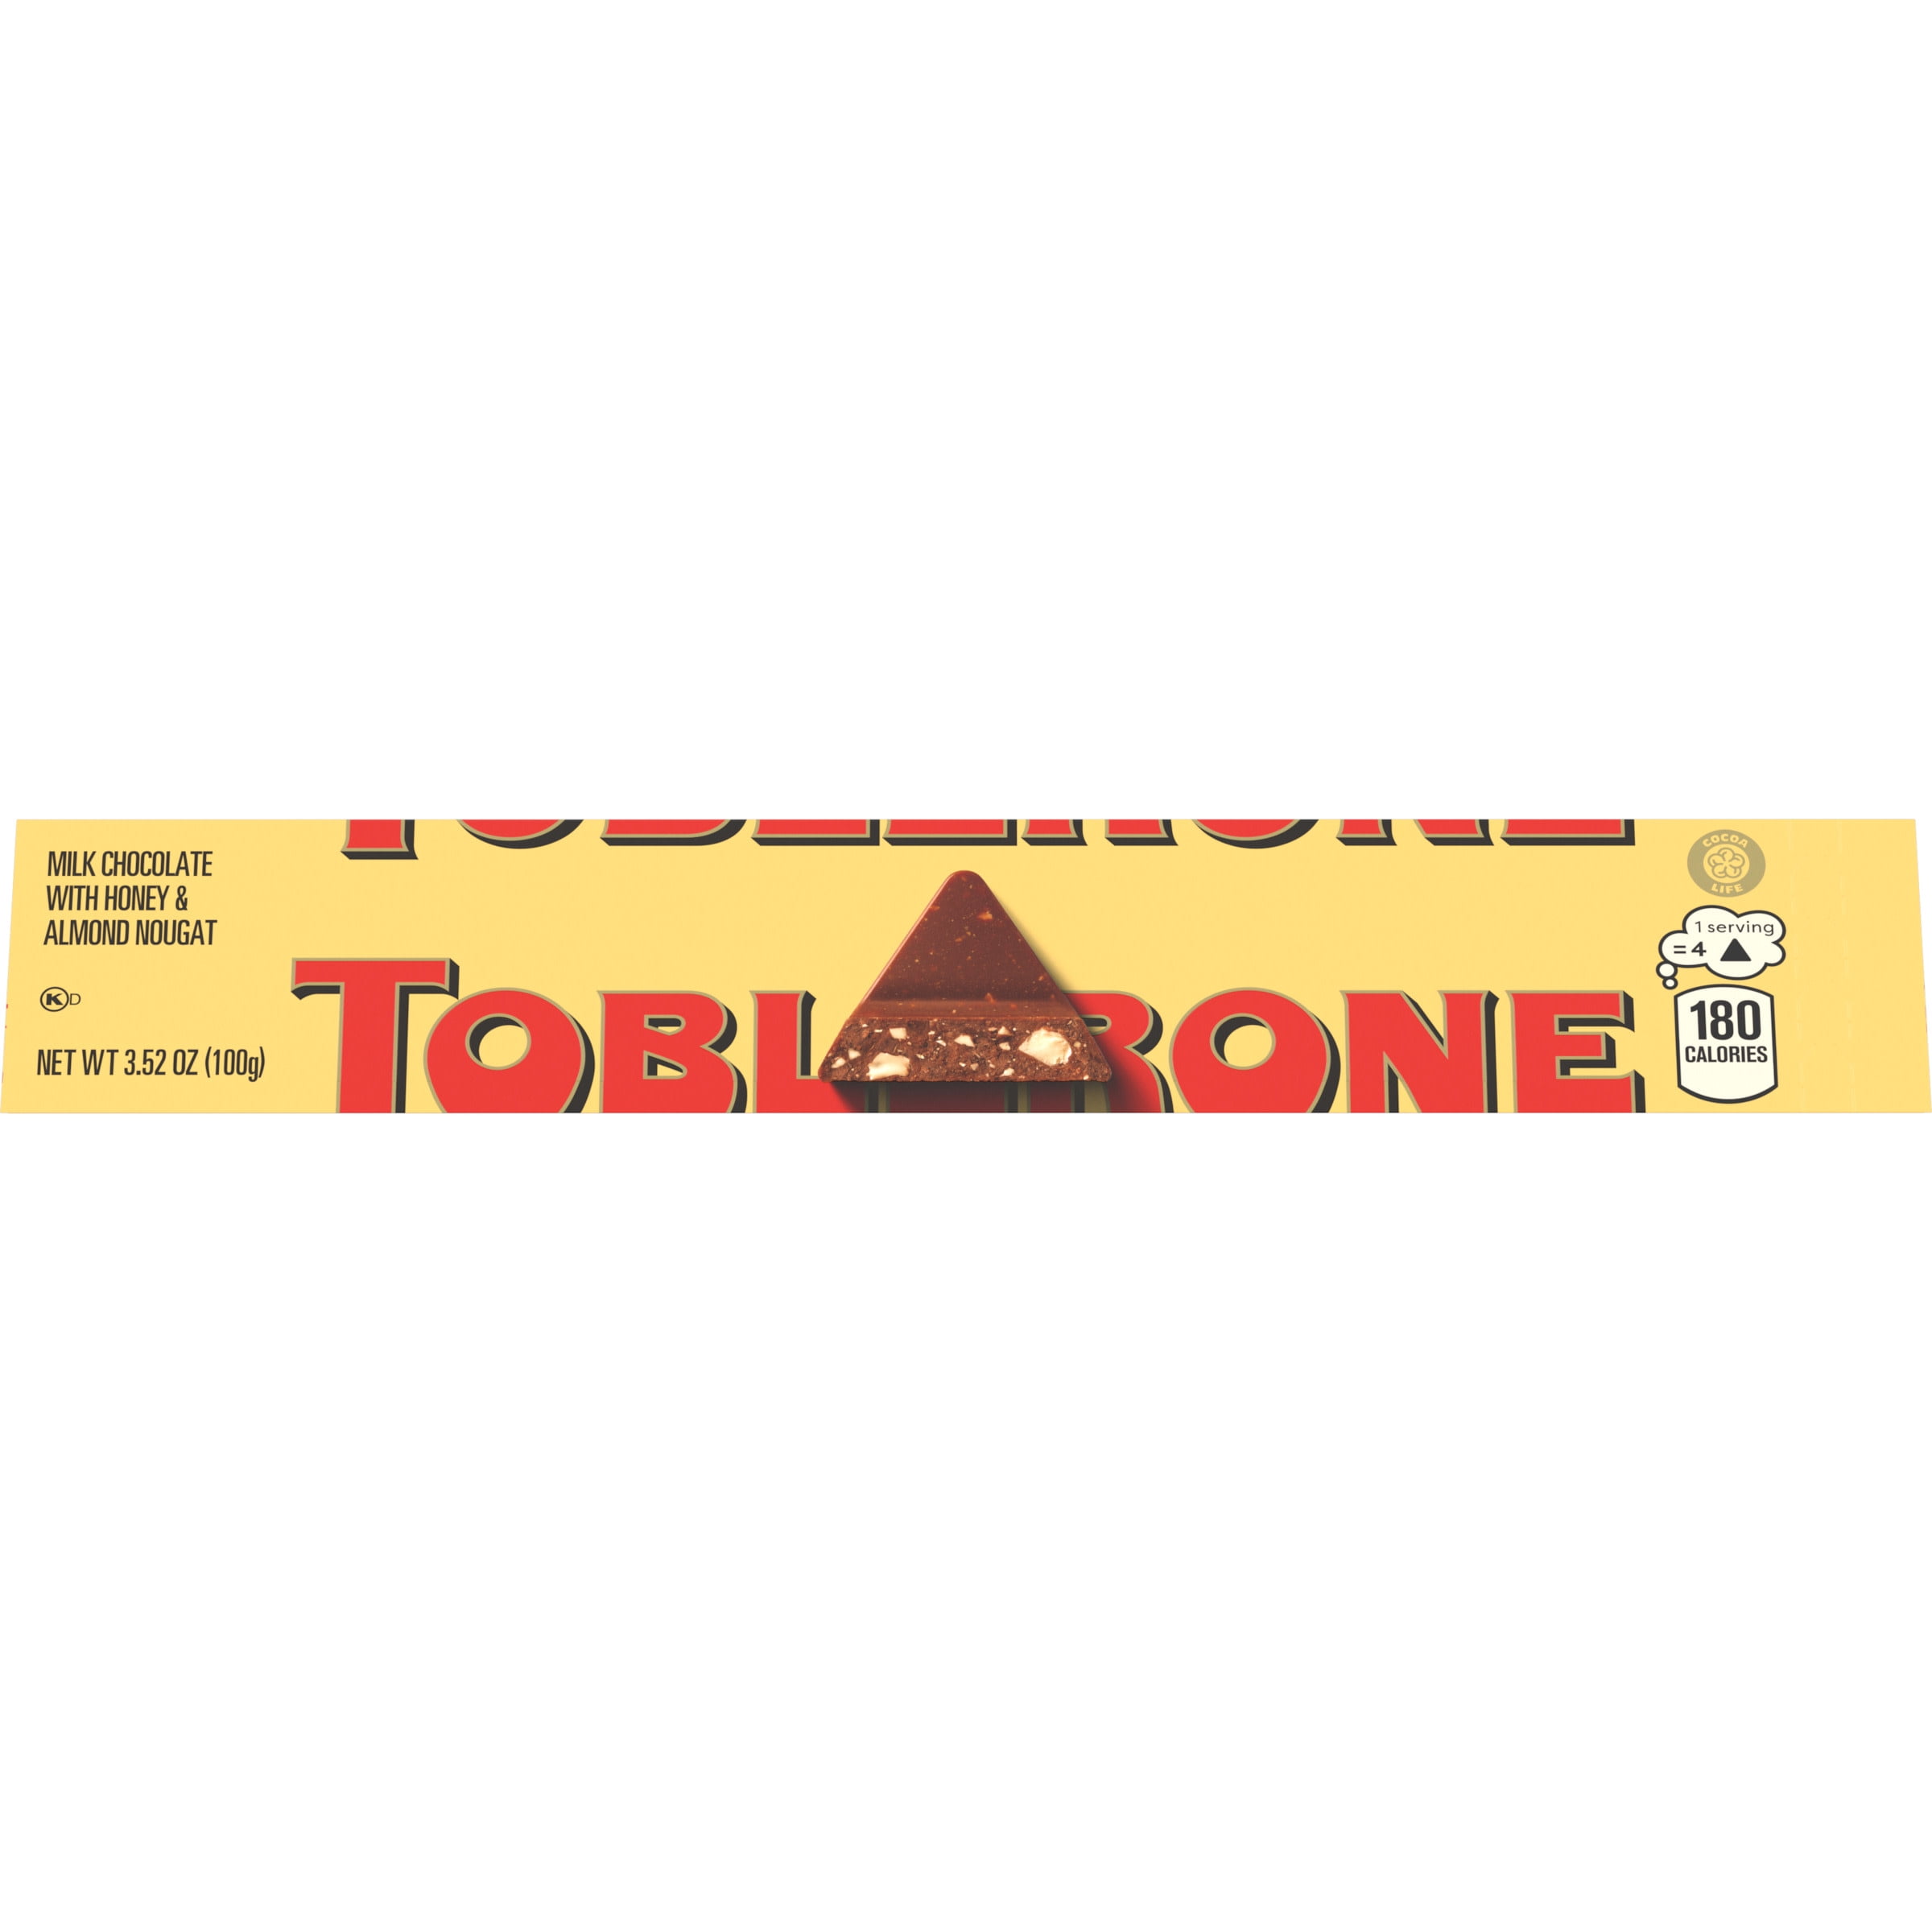 TOBLERON 4 x MIXED CHOCOLATES (DARK, WHITE, MILK, ALMOND) LARGE BARS 360g